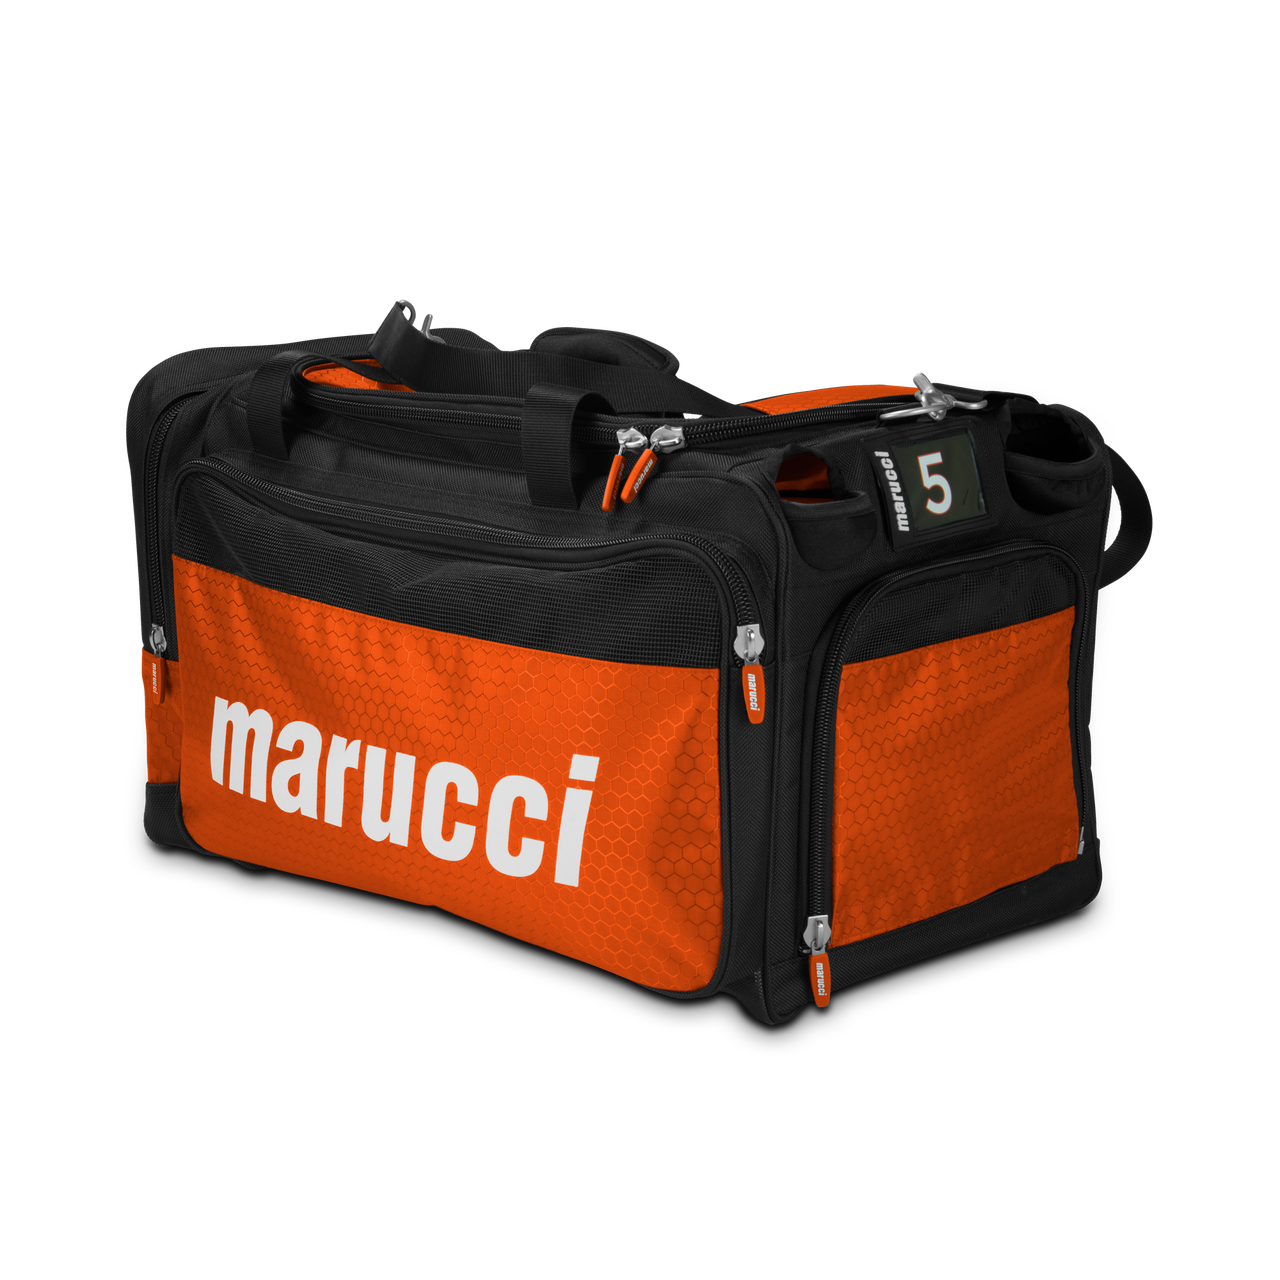 Marucci Team Duffel Bag